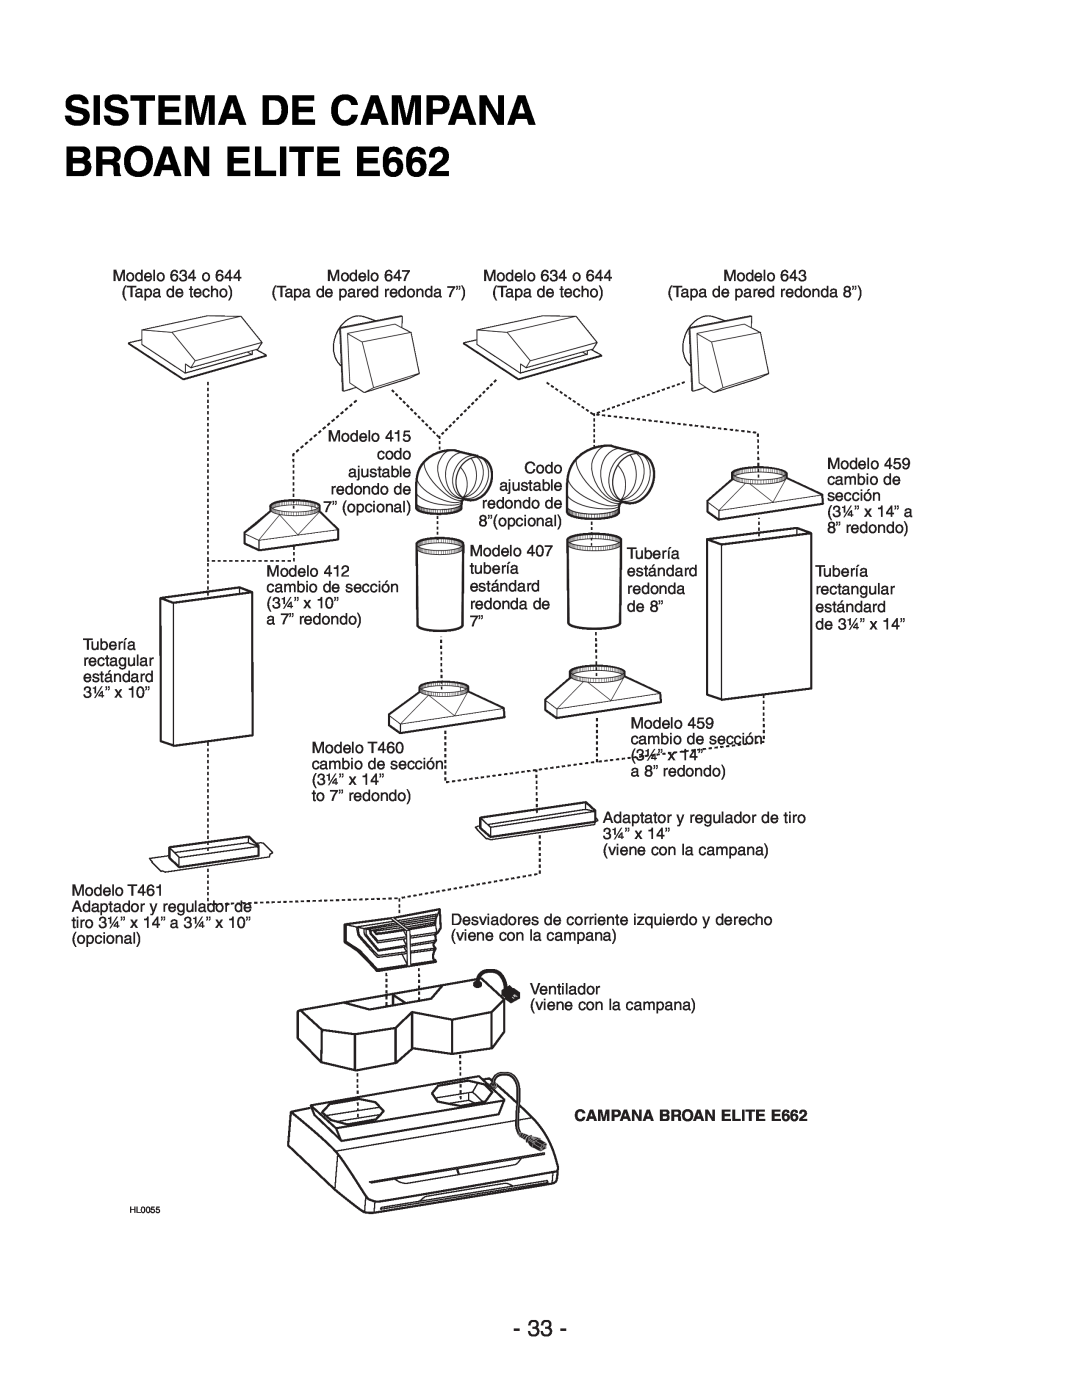 Broan Model E662 installation instructions SISTEMA DE CAMPANA BROAN ELITE E662 